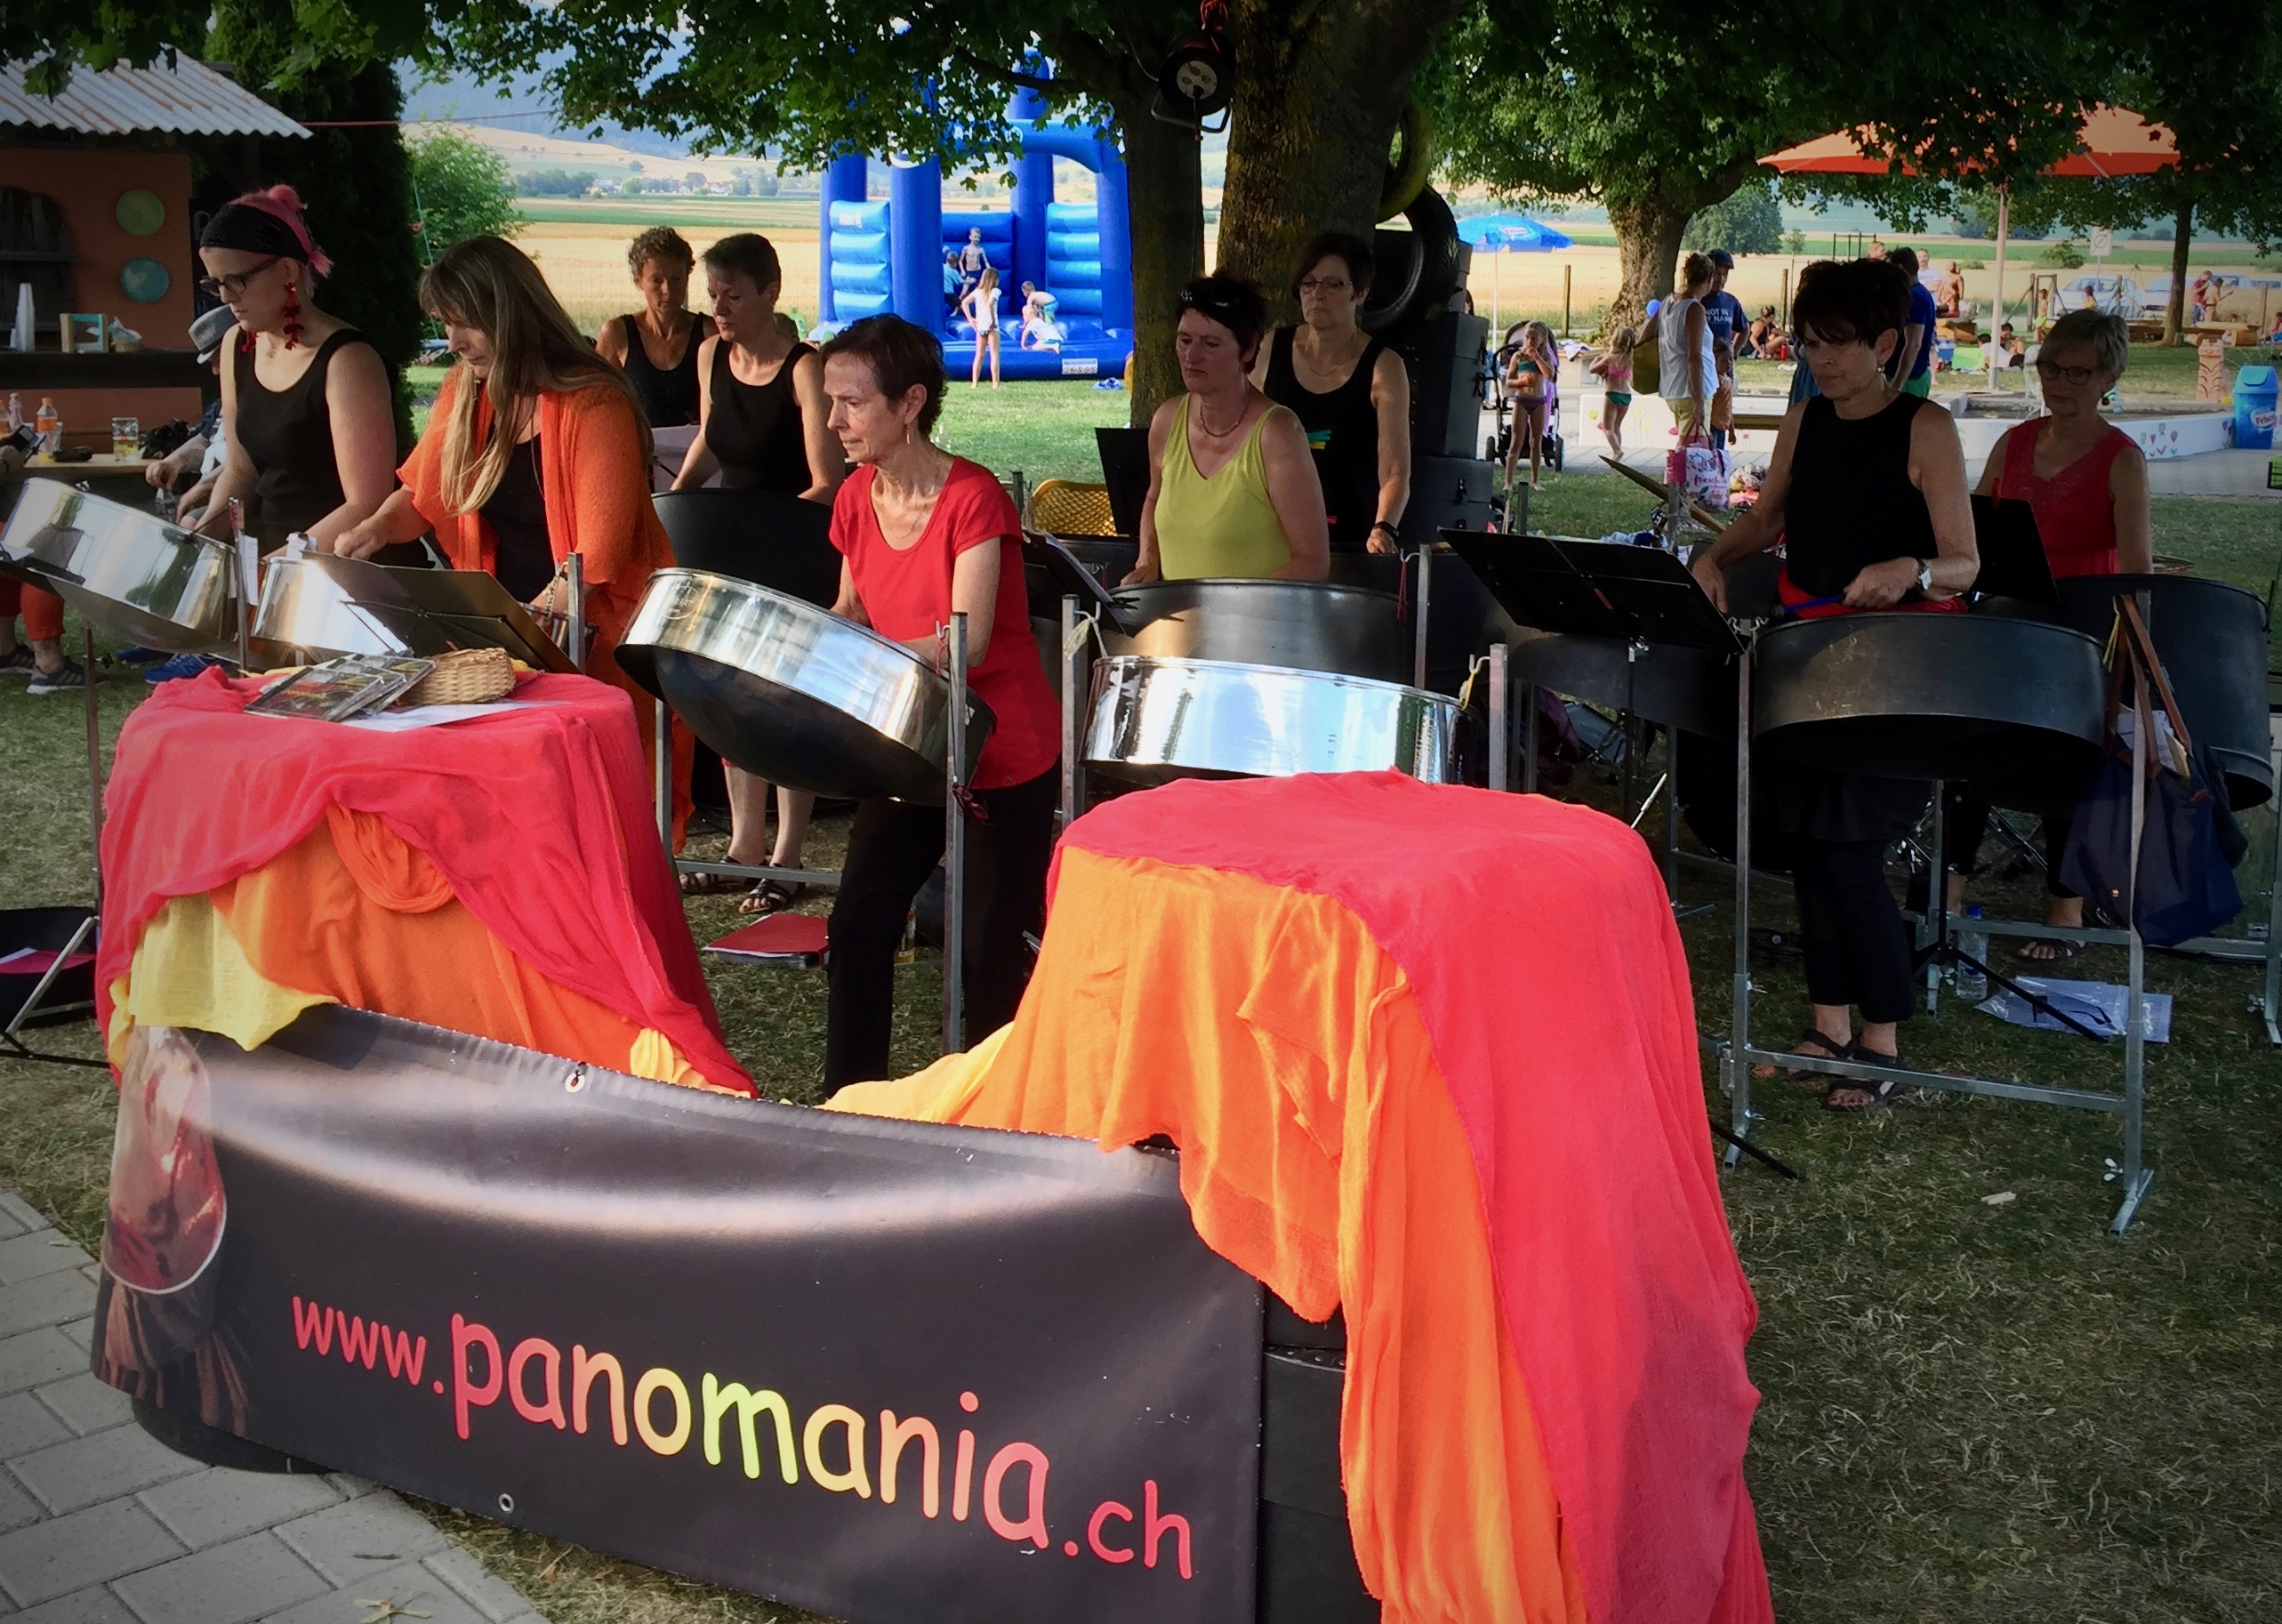 Panomania.ch